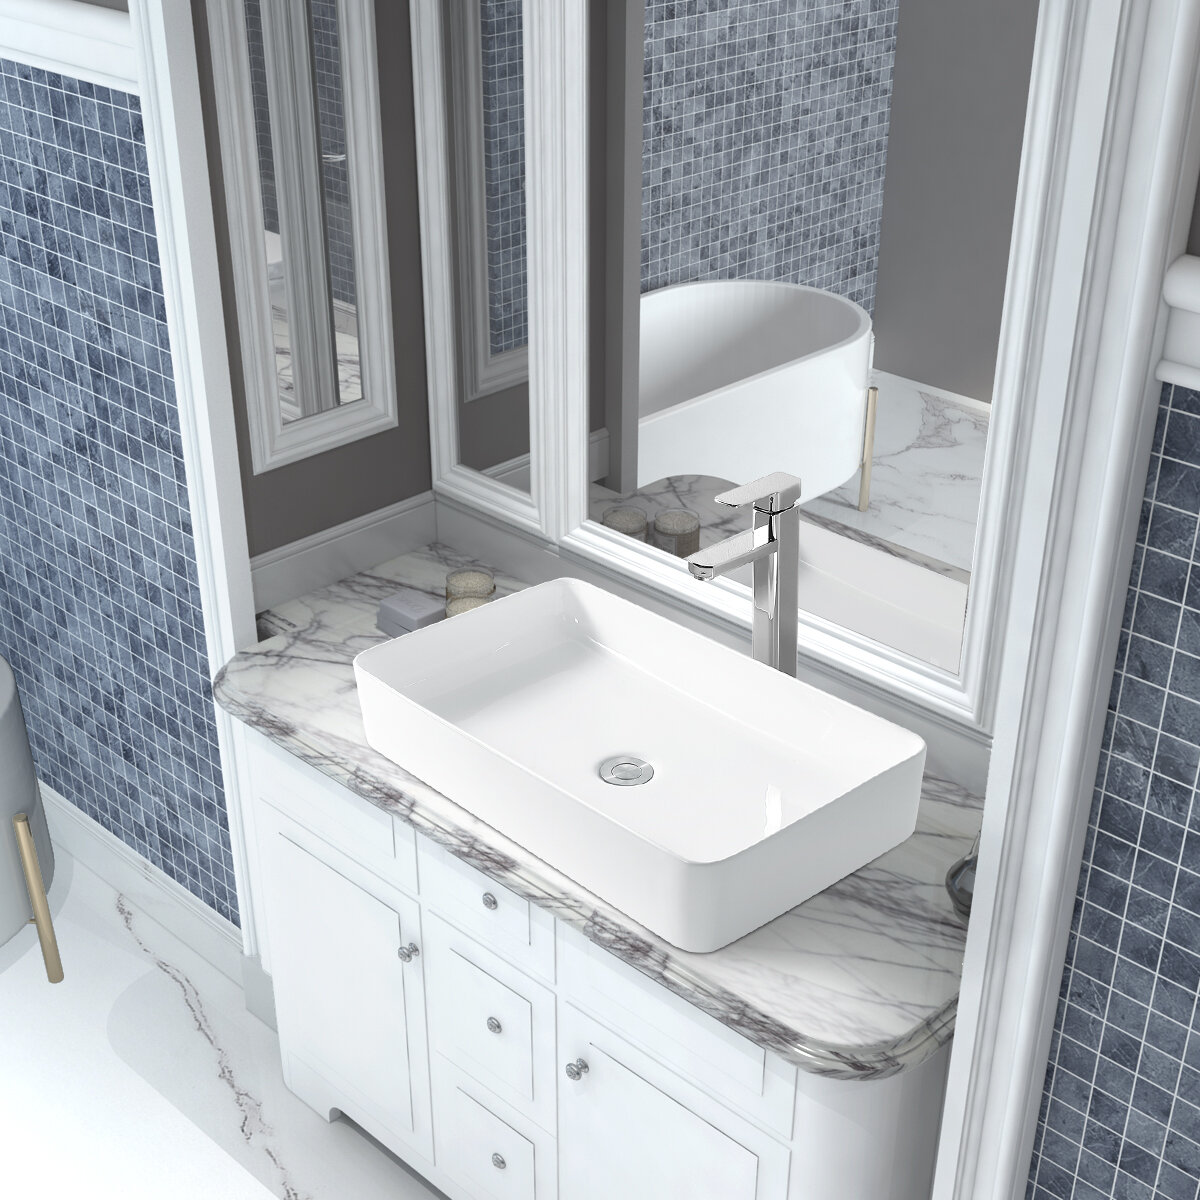 Sinber 24x14 Rectangle Ceramic Bathroom Vanity Vessel Sink Above